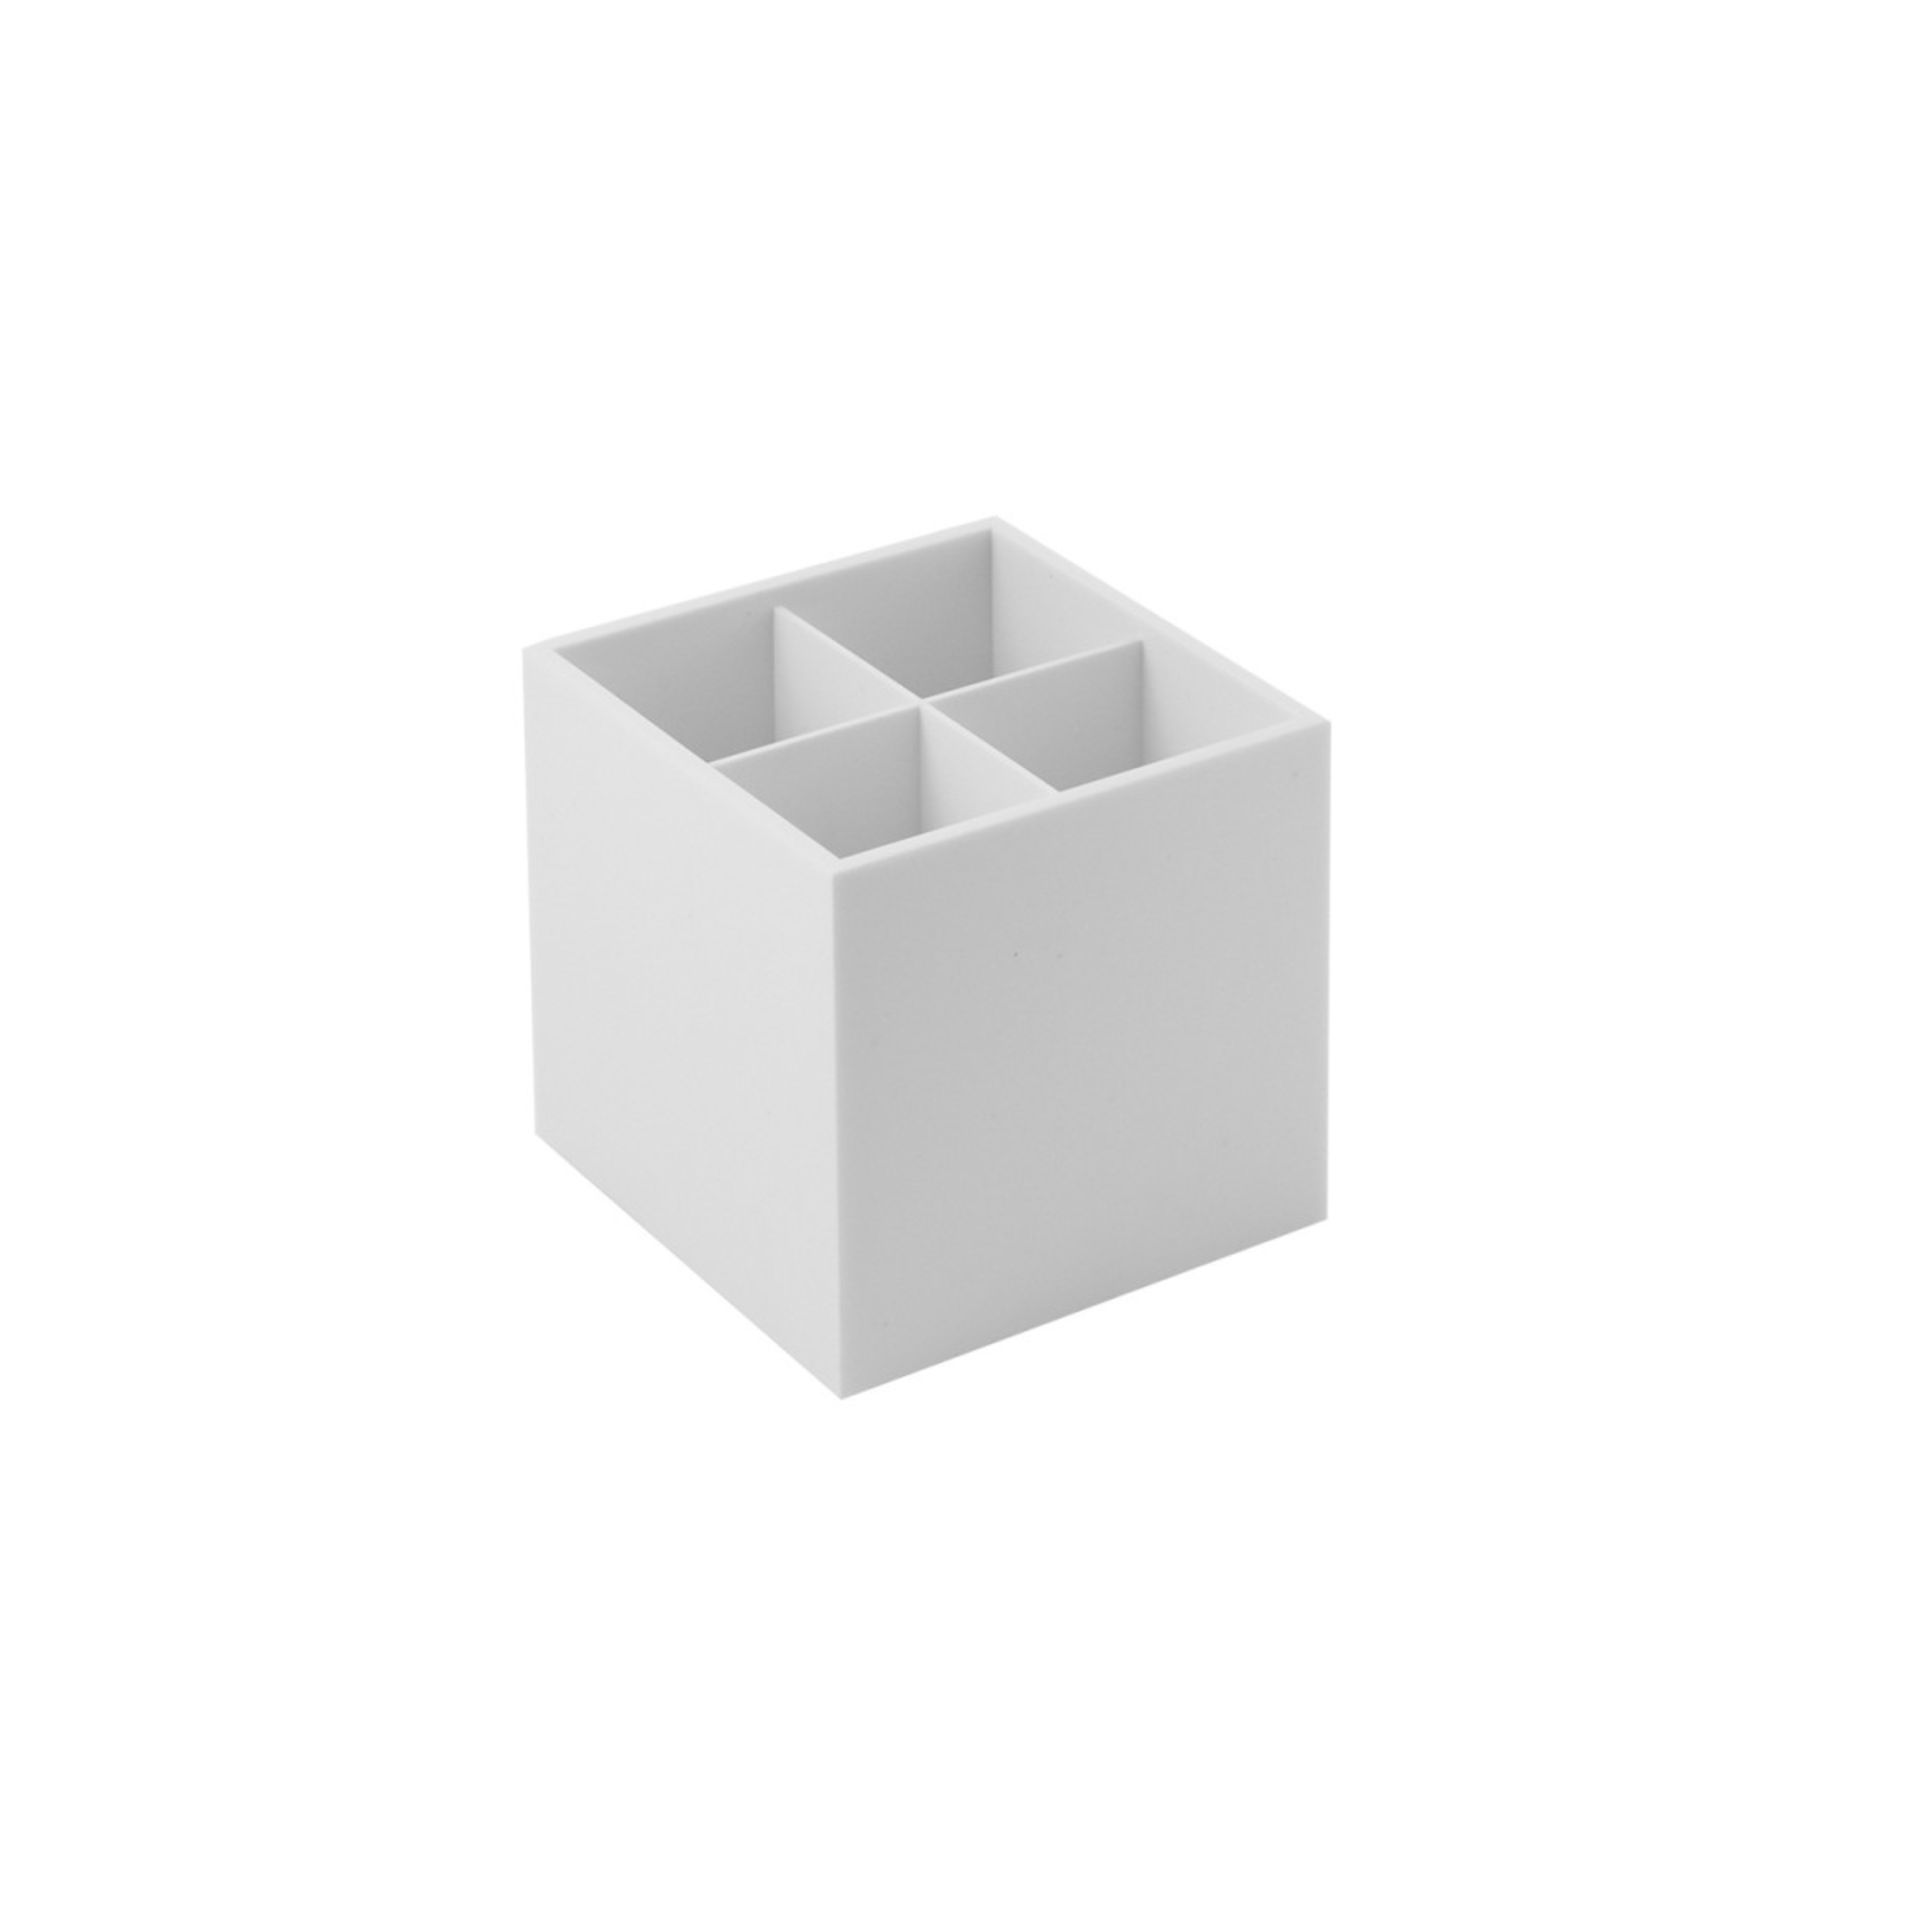 Cosmic - Bathlifea White Container ( 12x12x12cm ) - New & Boxed.